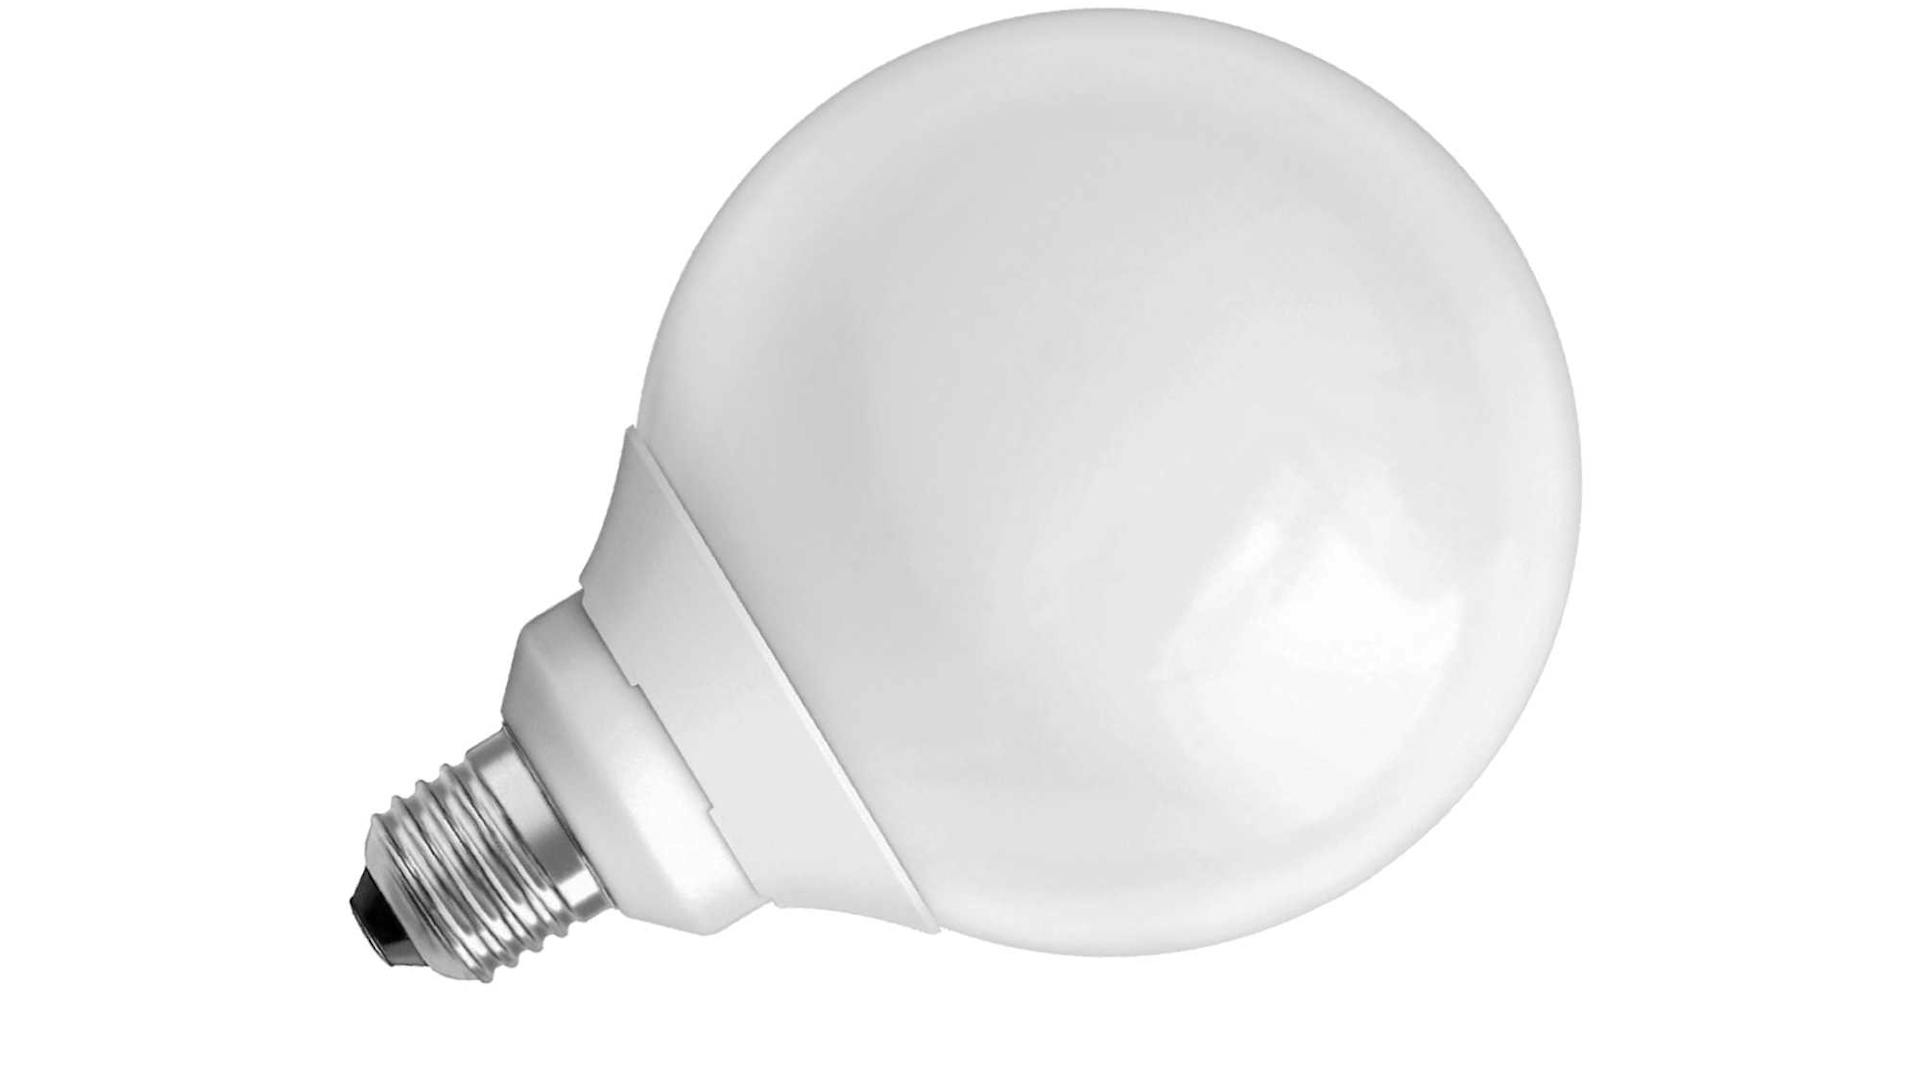 oder LED Lampen im Vergleich | OBI